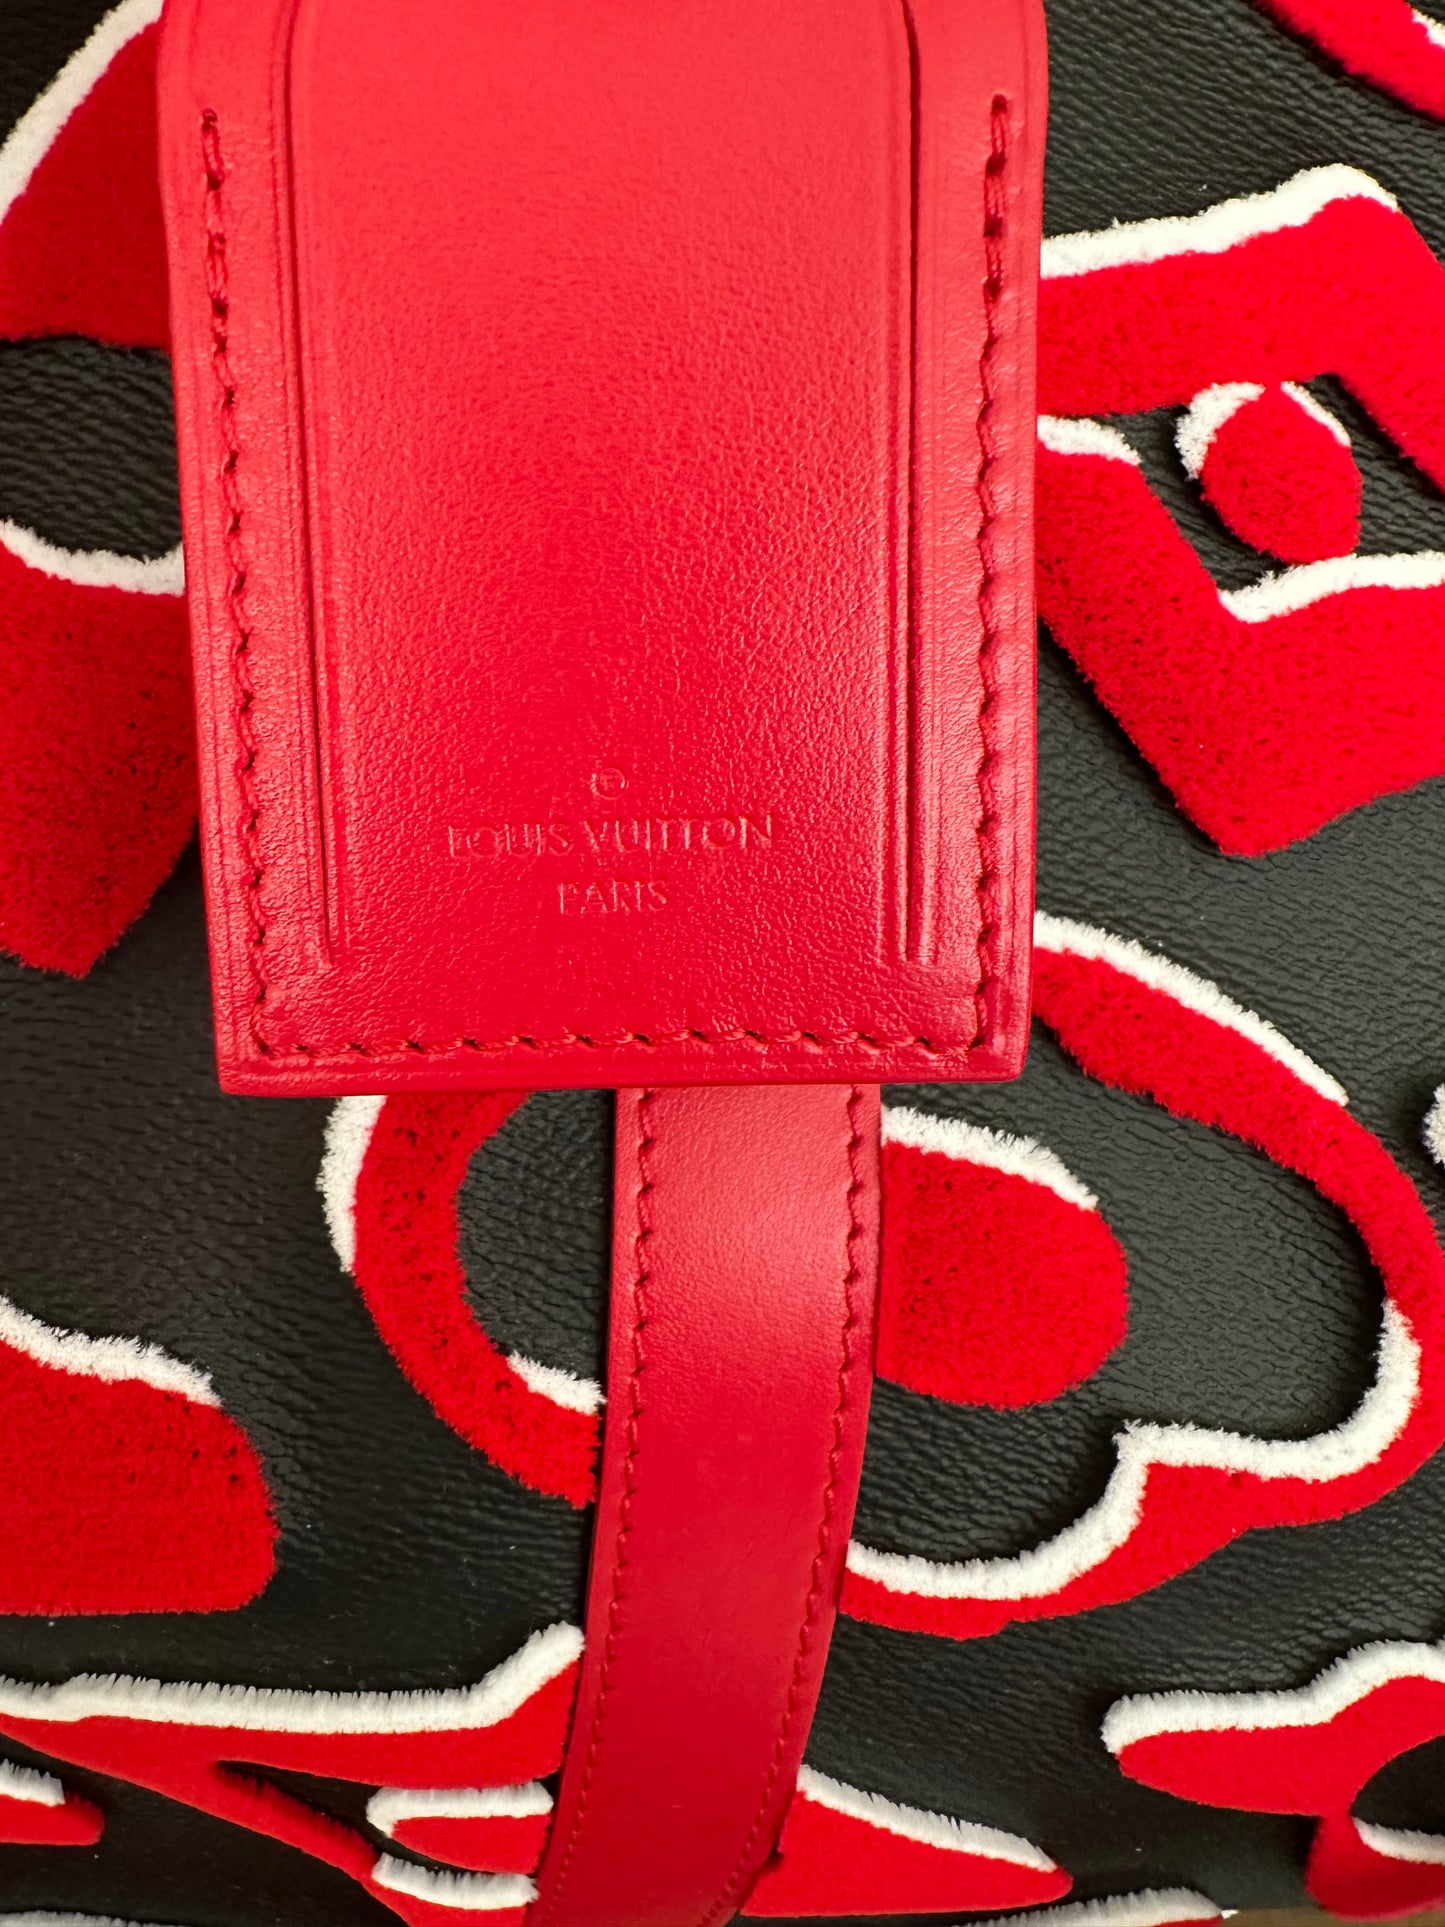 Louis Vuitton Speedy Bandouliere Bag Limited Edition Urs Fischer Tufted